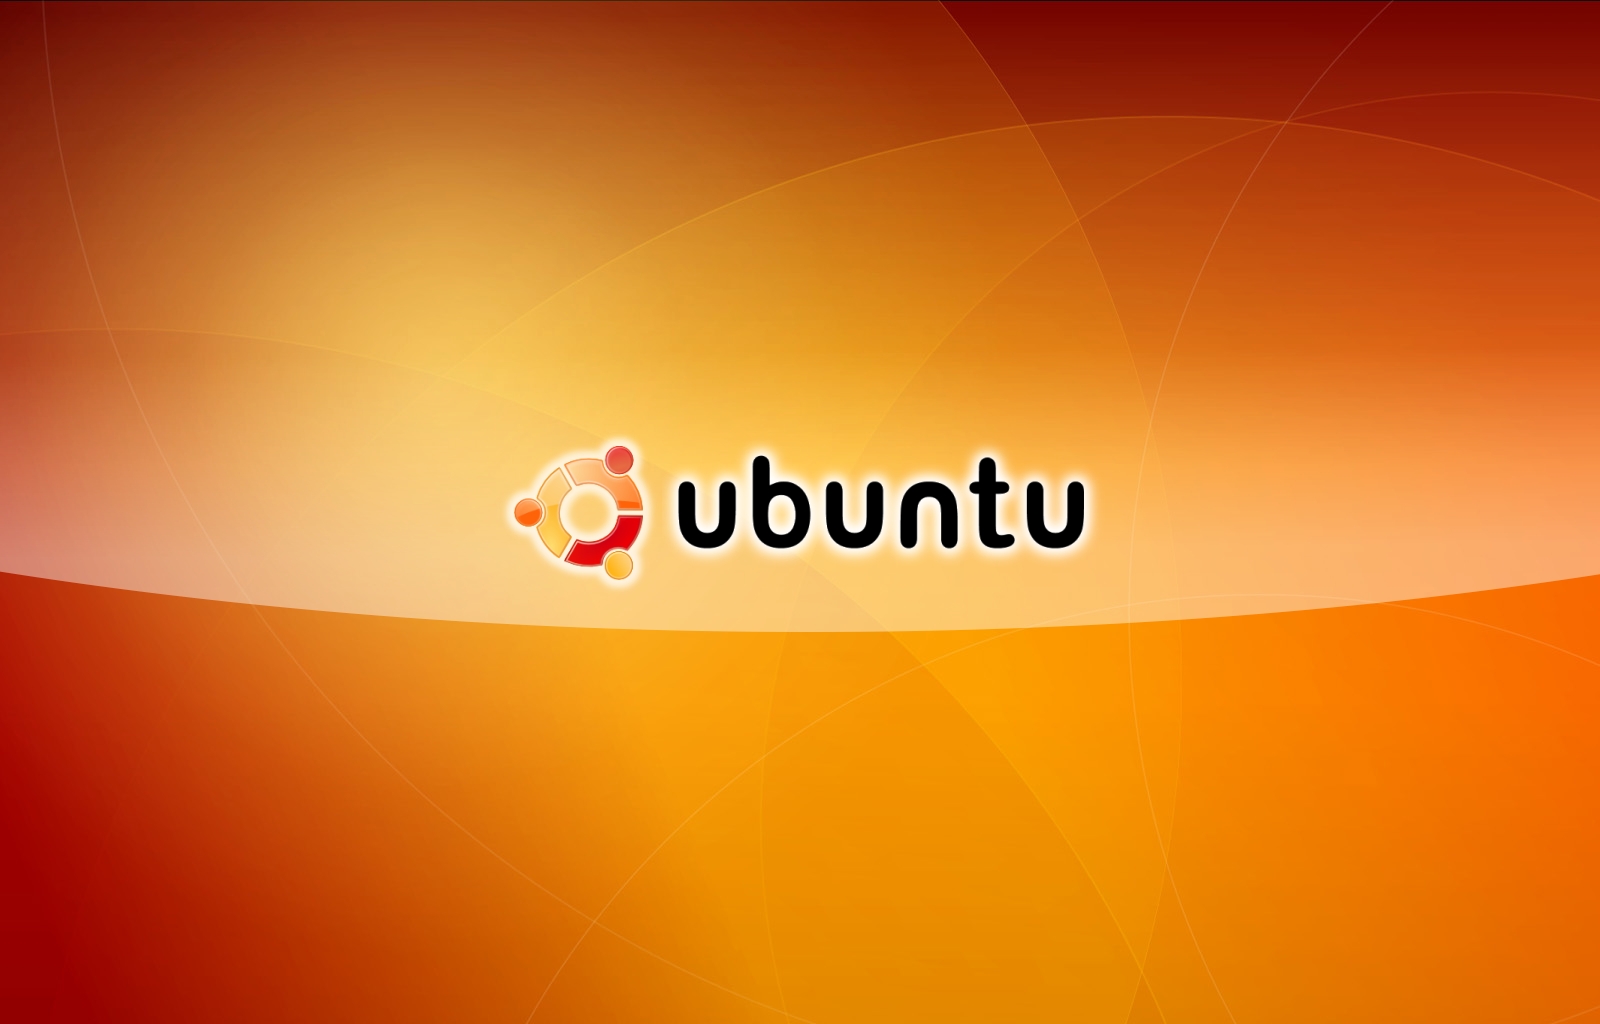 HD Wallpaper Ubuntu